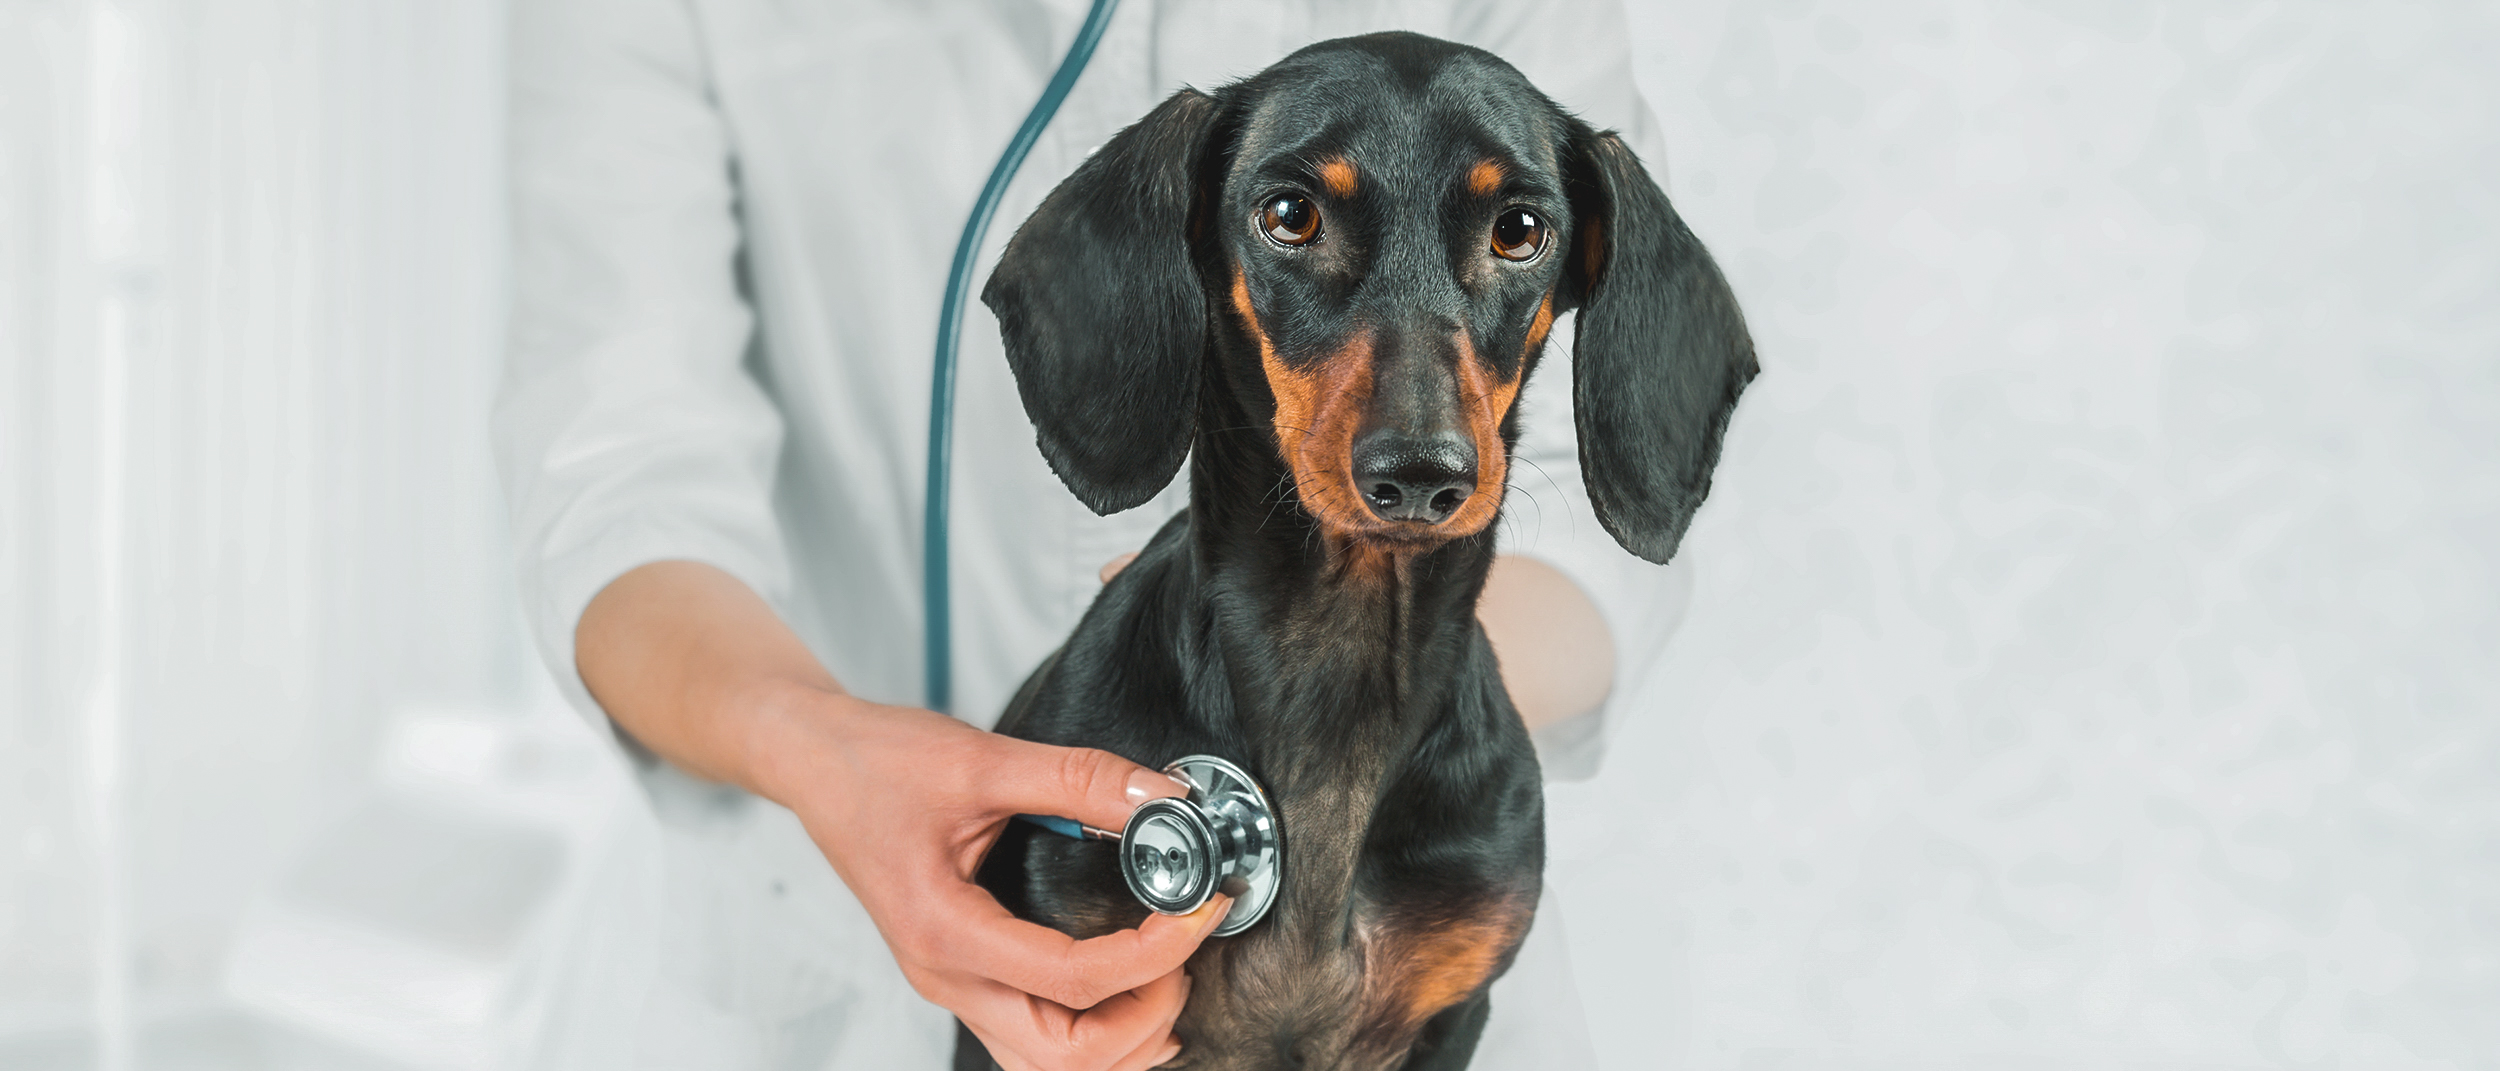 Anjing Dachshund dewasa duduk di atas meja pemeriksaan sedang diperiksa oleh dokter hewan.